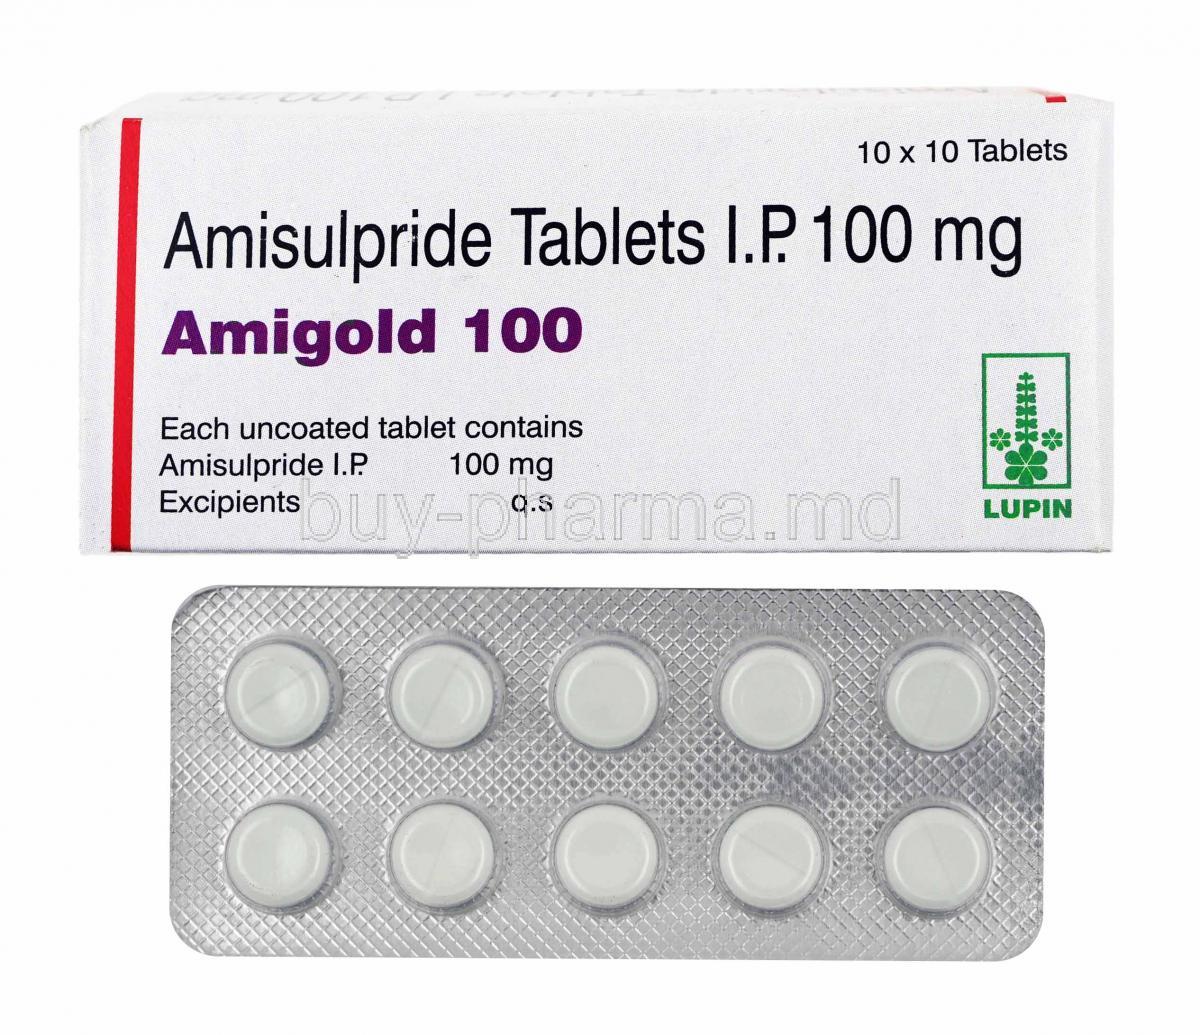 Amigold, Amisulpride 100mg box and tablets